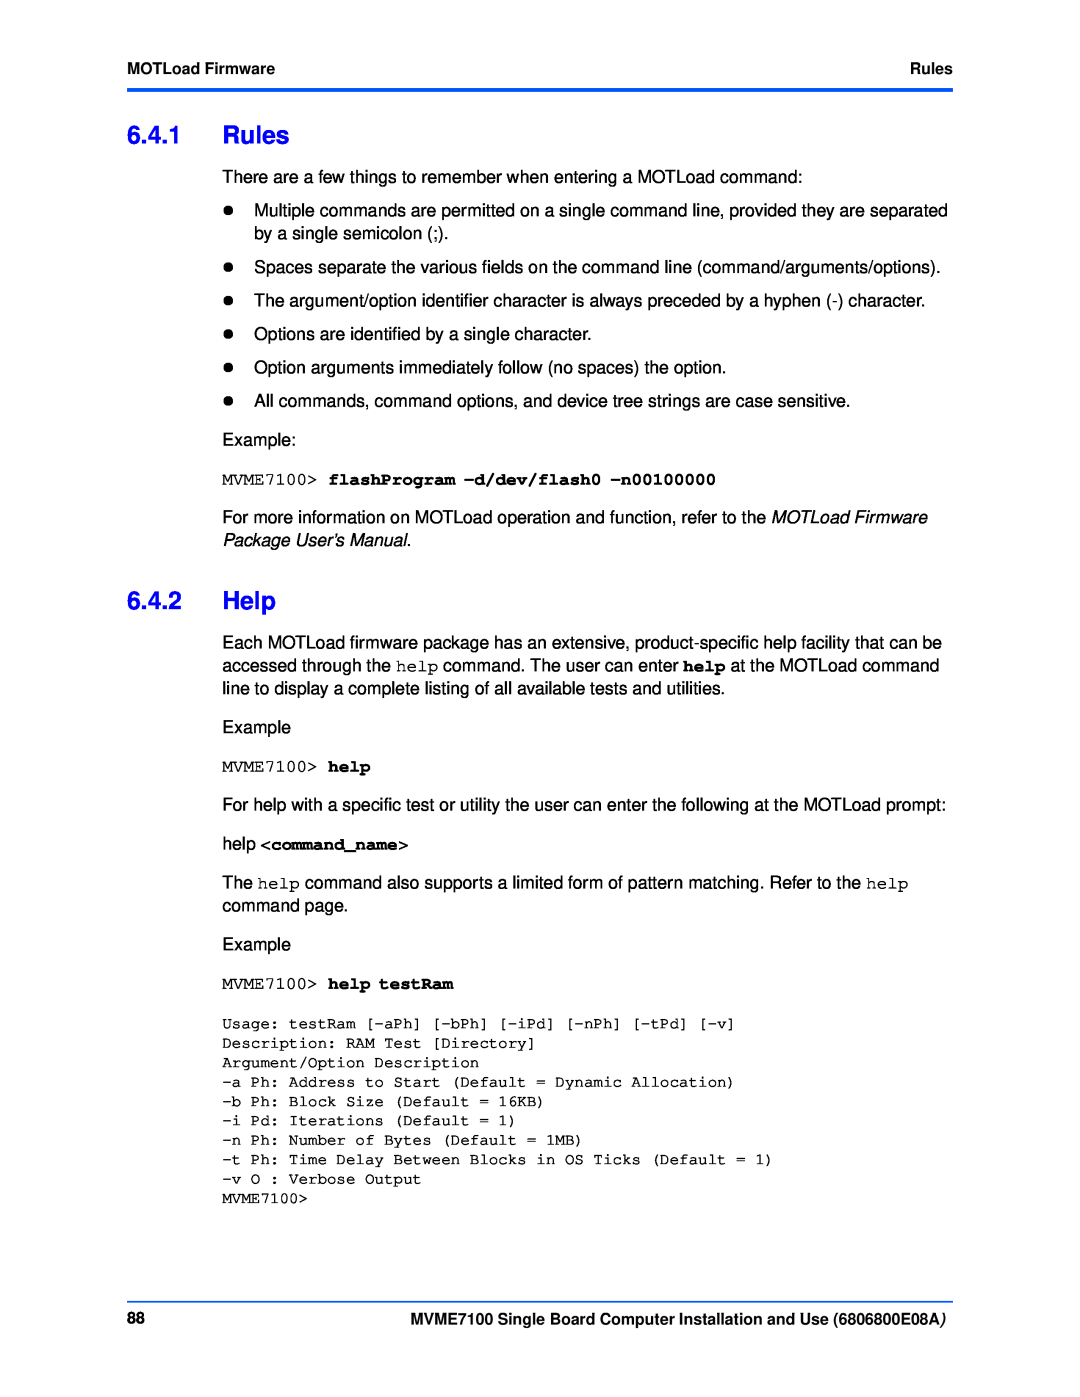 Emerson manual Rules, Help, MVME7100 flashProgram -d/dev/flash0 -n00100000, help commandname, MVME7100 help testRam 